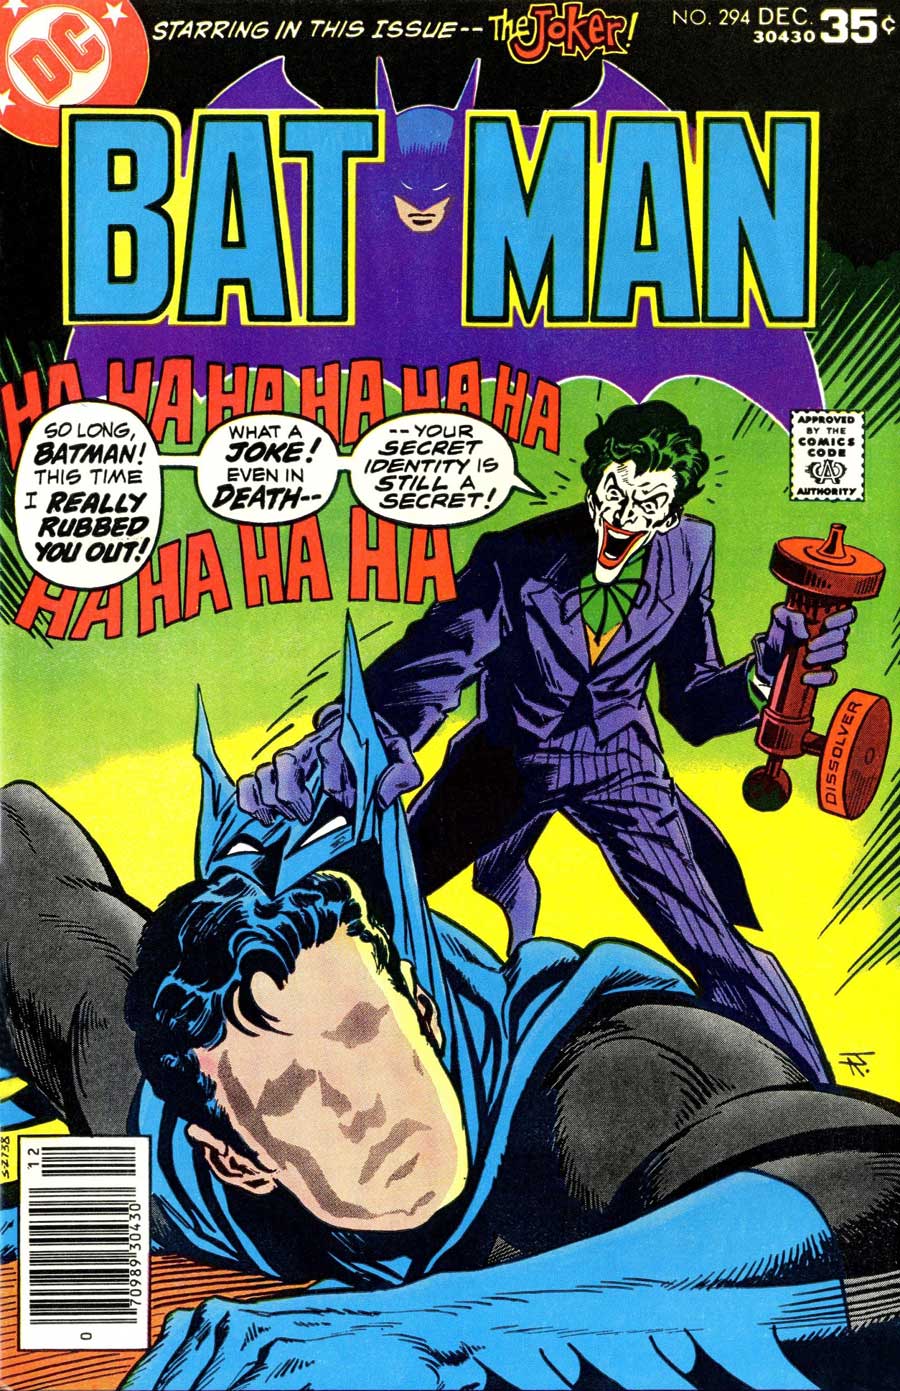 Batman #294 cover by Jim Aparo